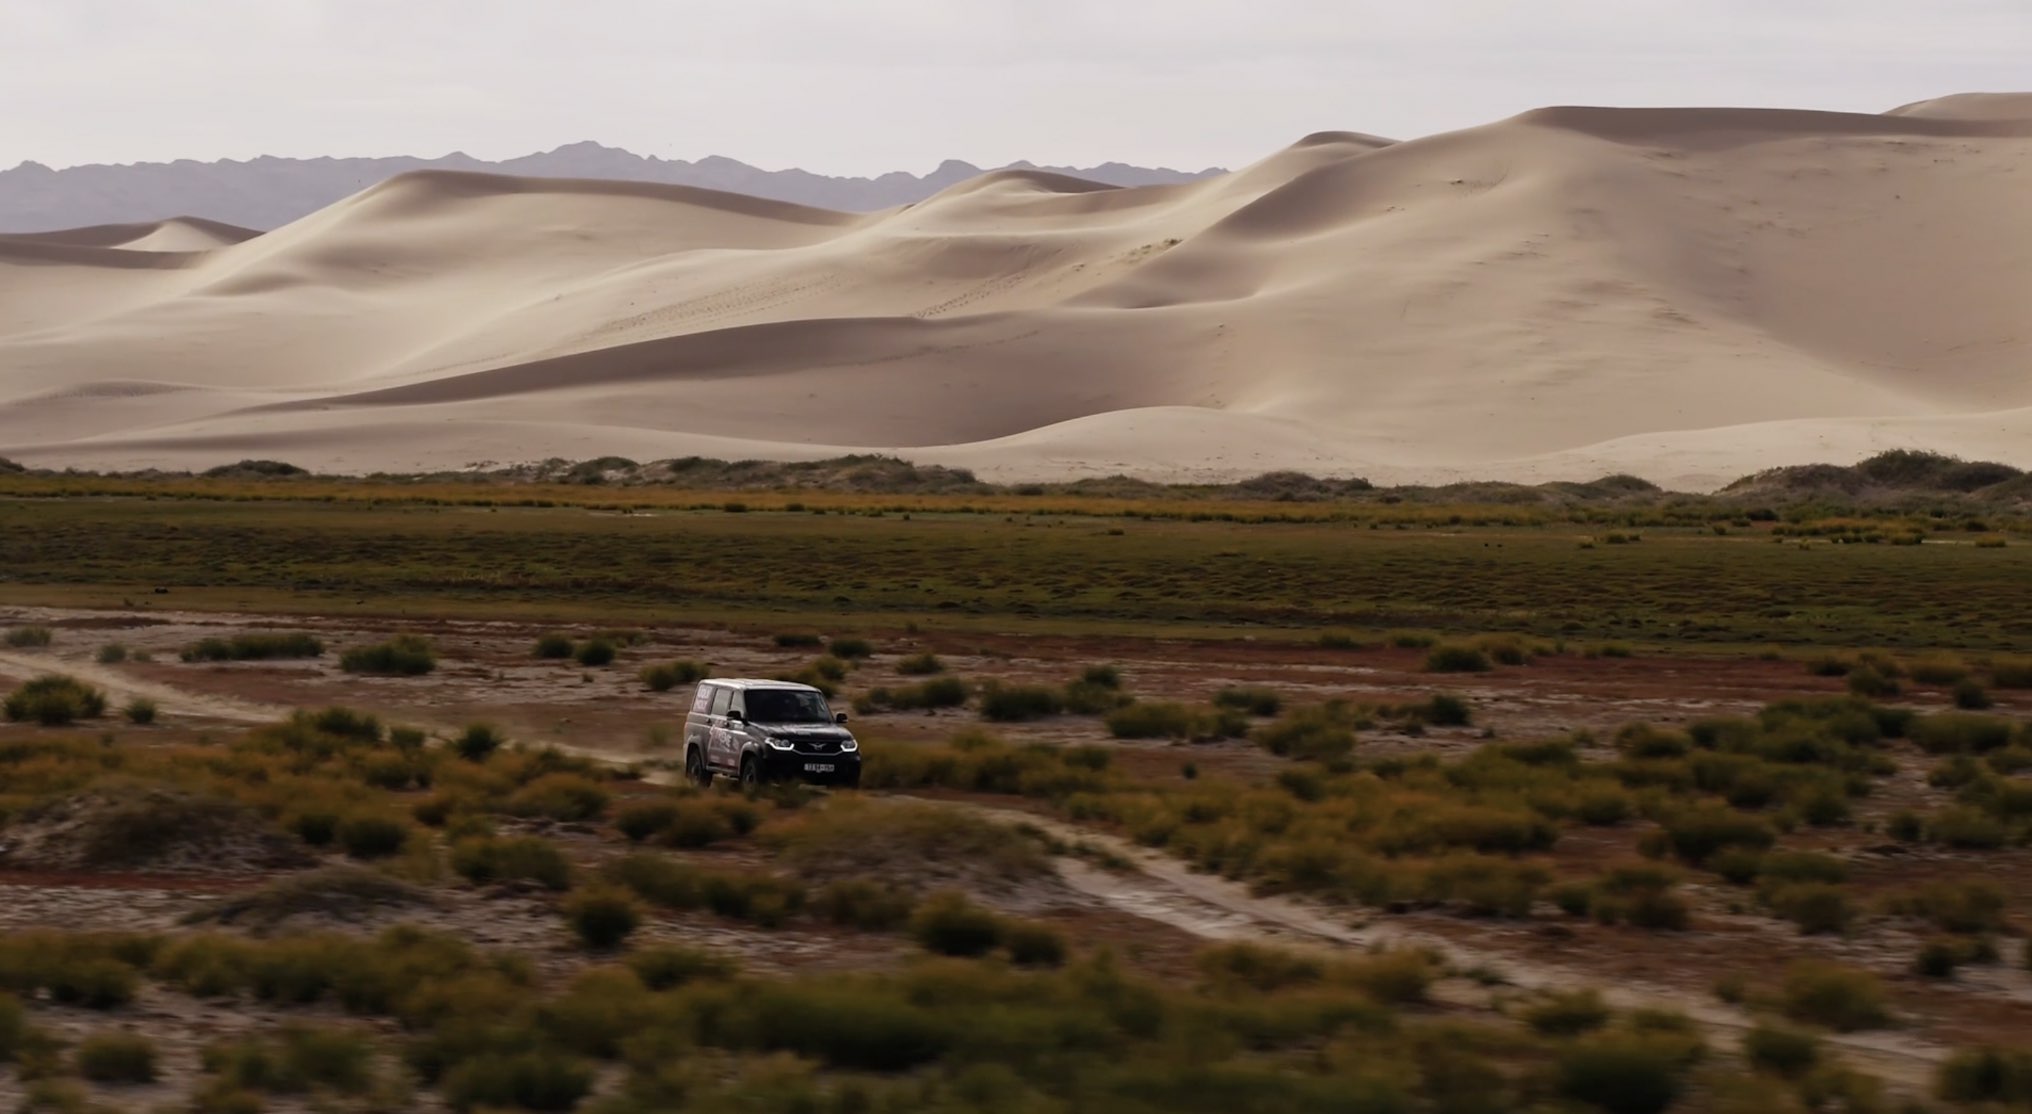 Exploring the Flaming Cliffs in the Gobi desert